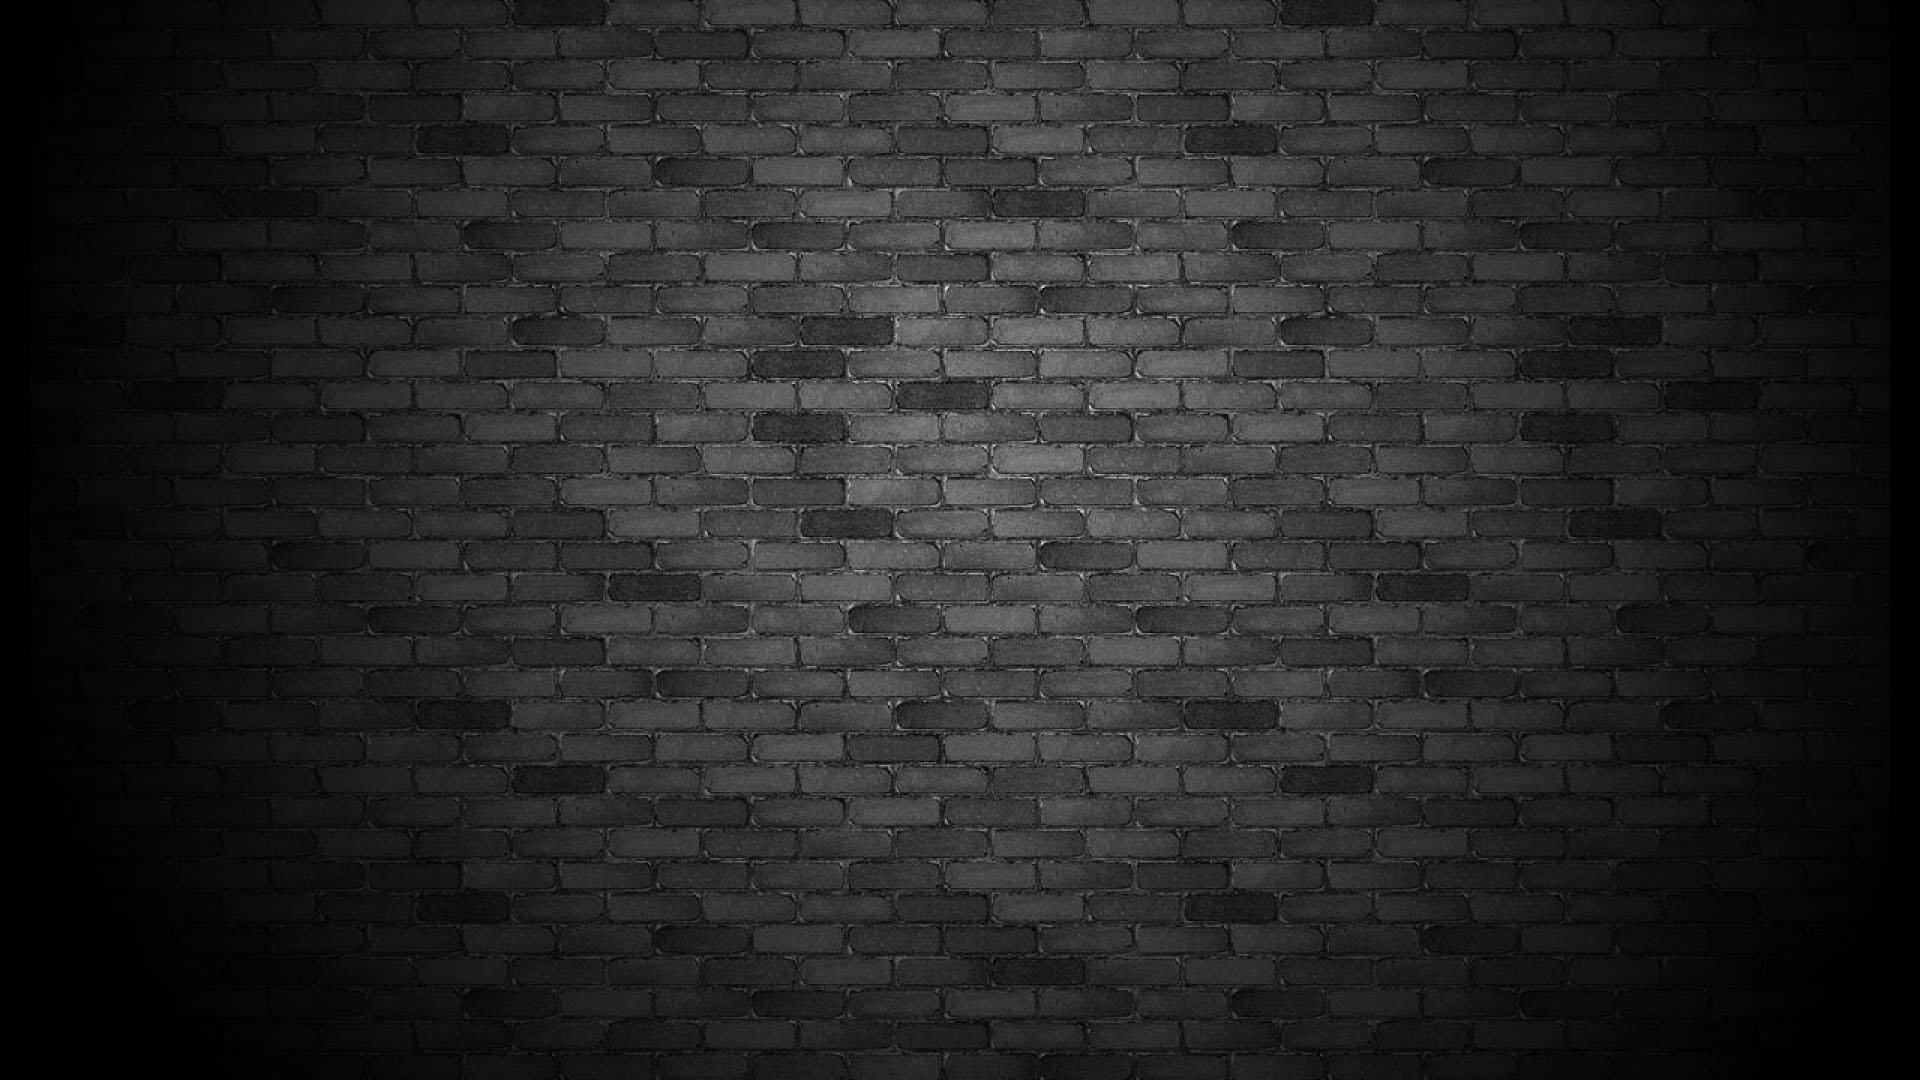 Black Brick Wall Background